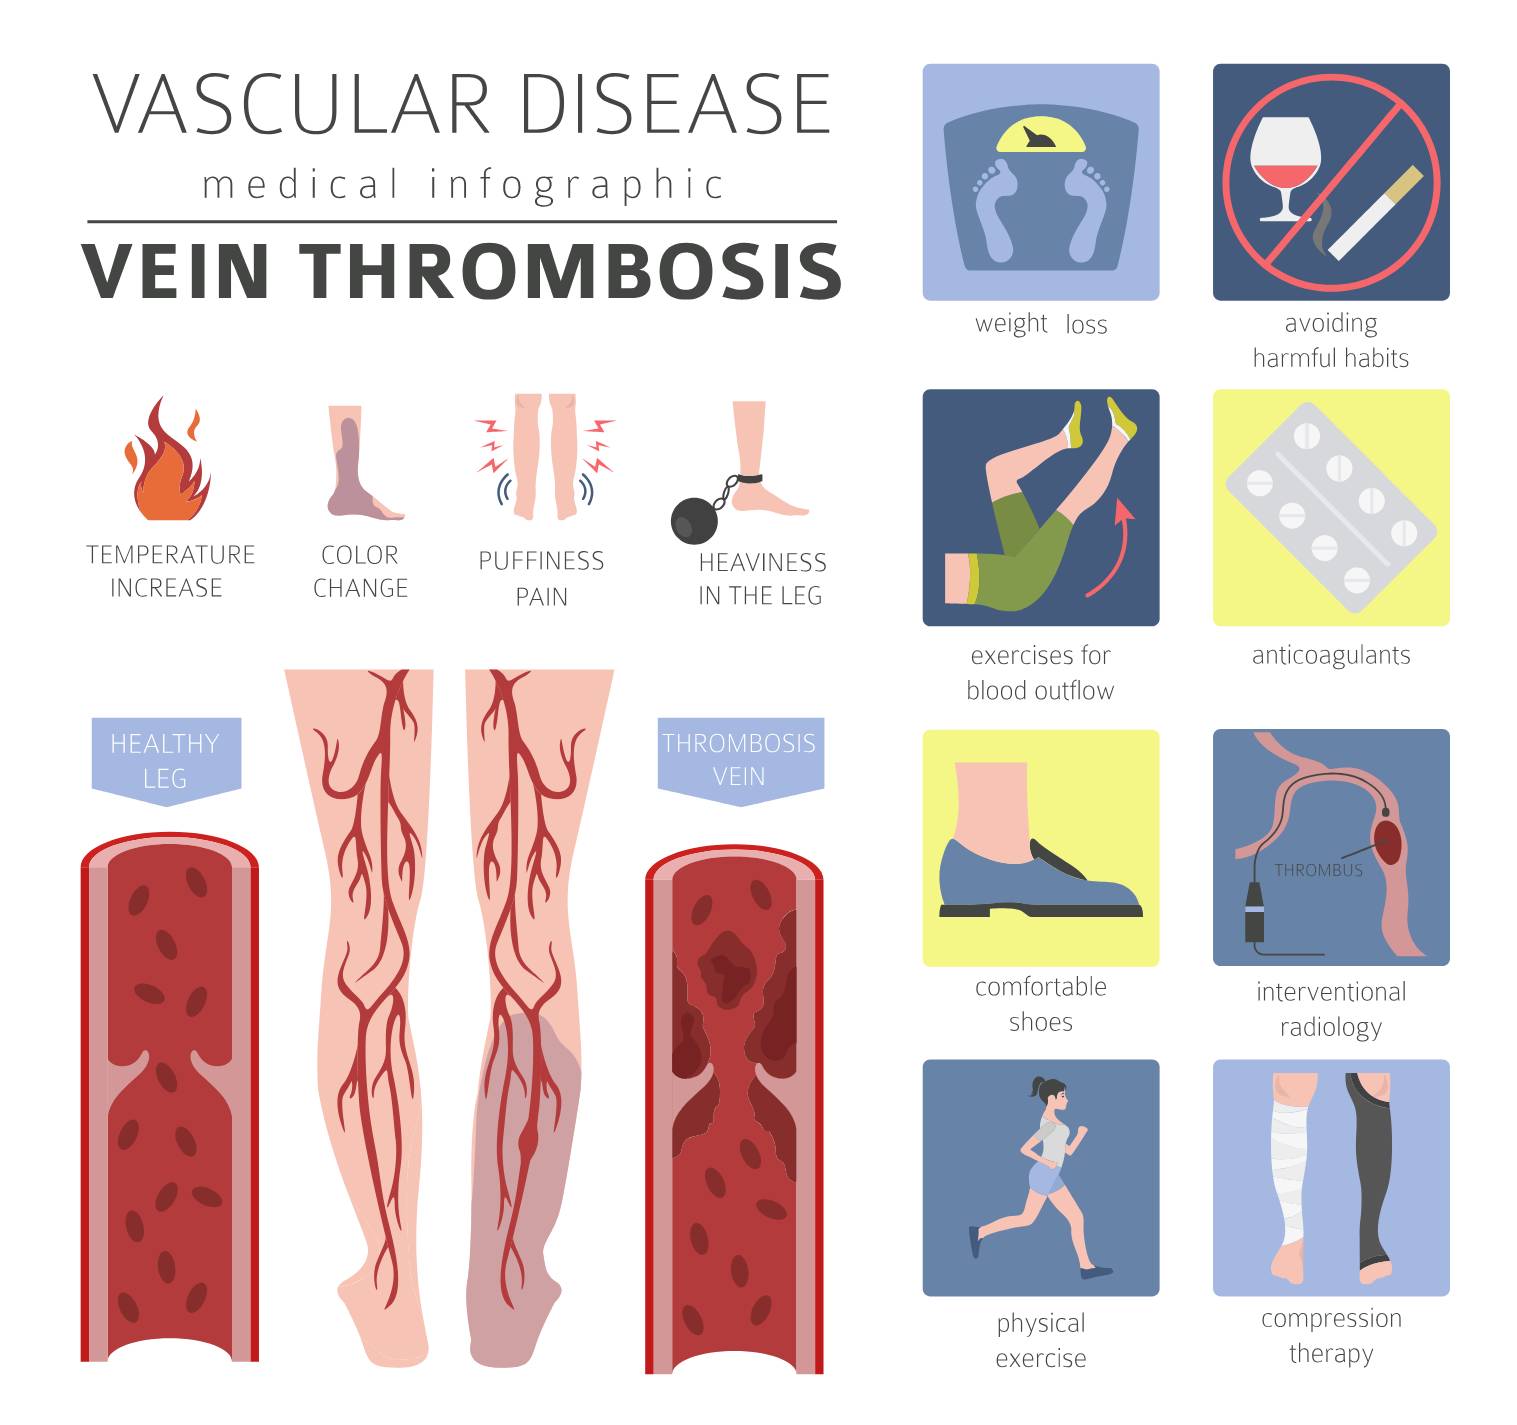 Venous Thromboembolism Symptoms And Prevention - Bank2home.com